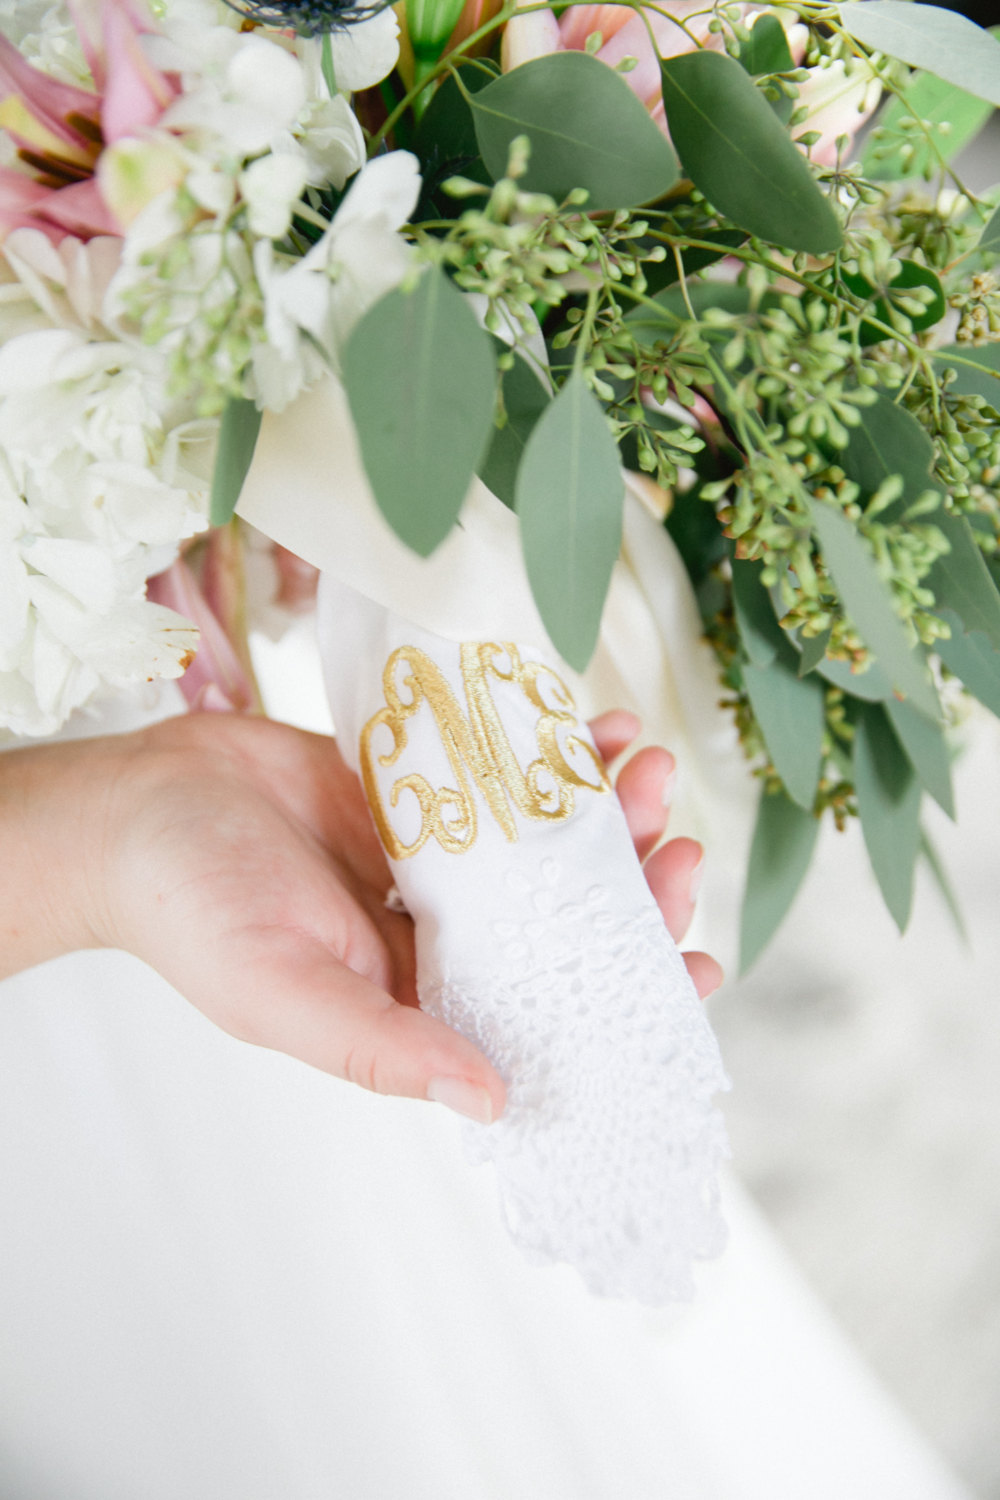 Where to Put Bridal Handkerchief During Wedding? - Ask Emmaline